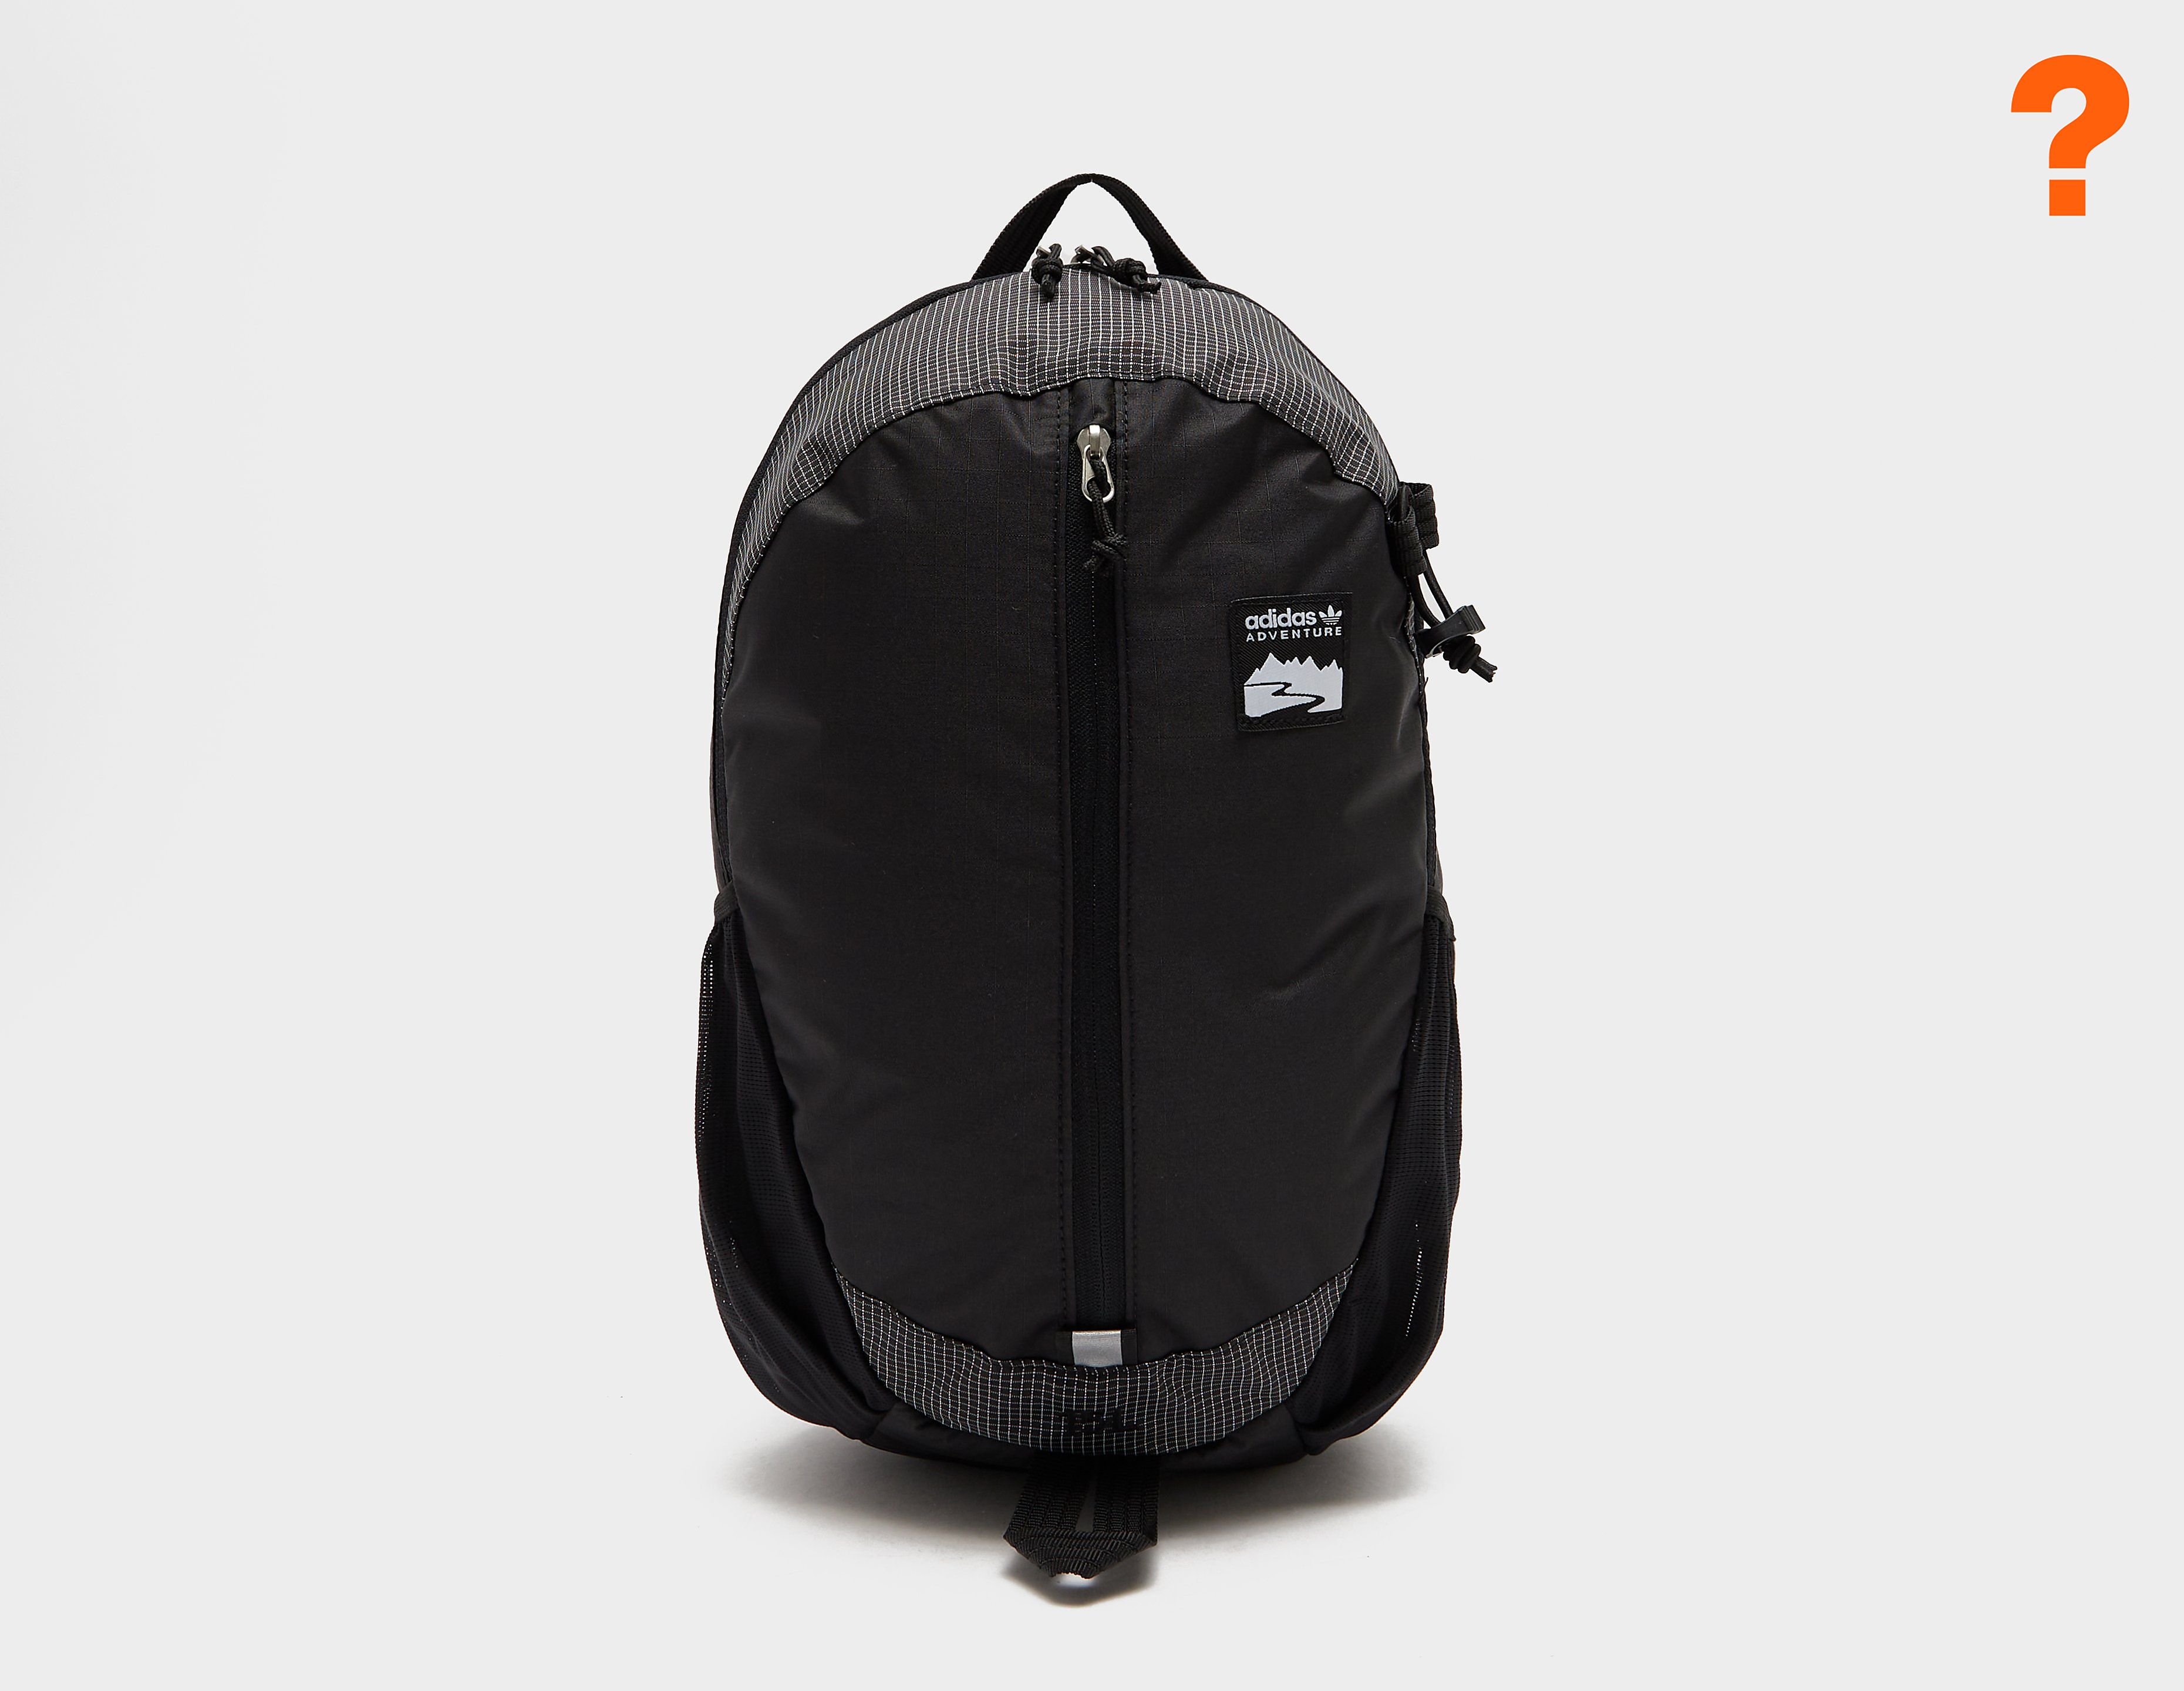 Adidas Originals Adventure Backpack Small, Black